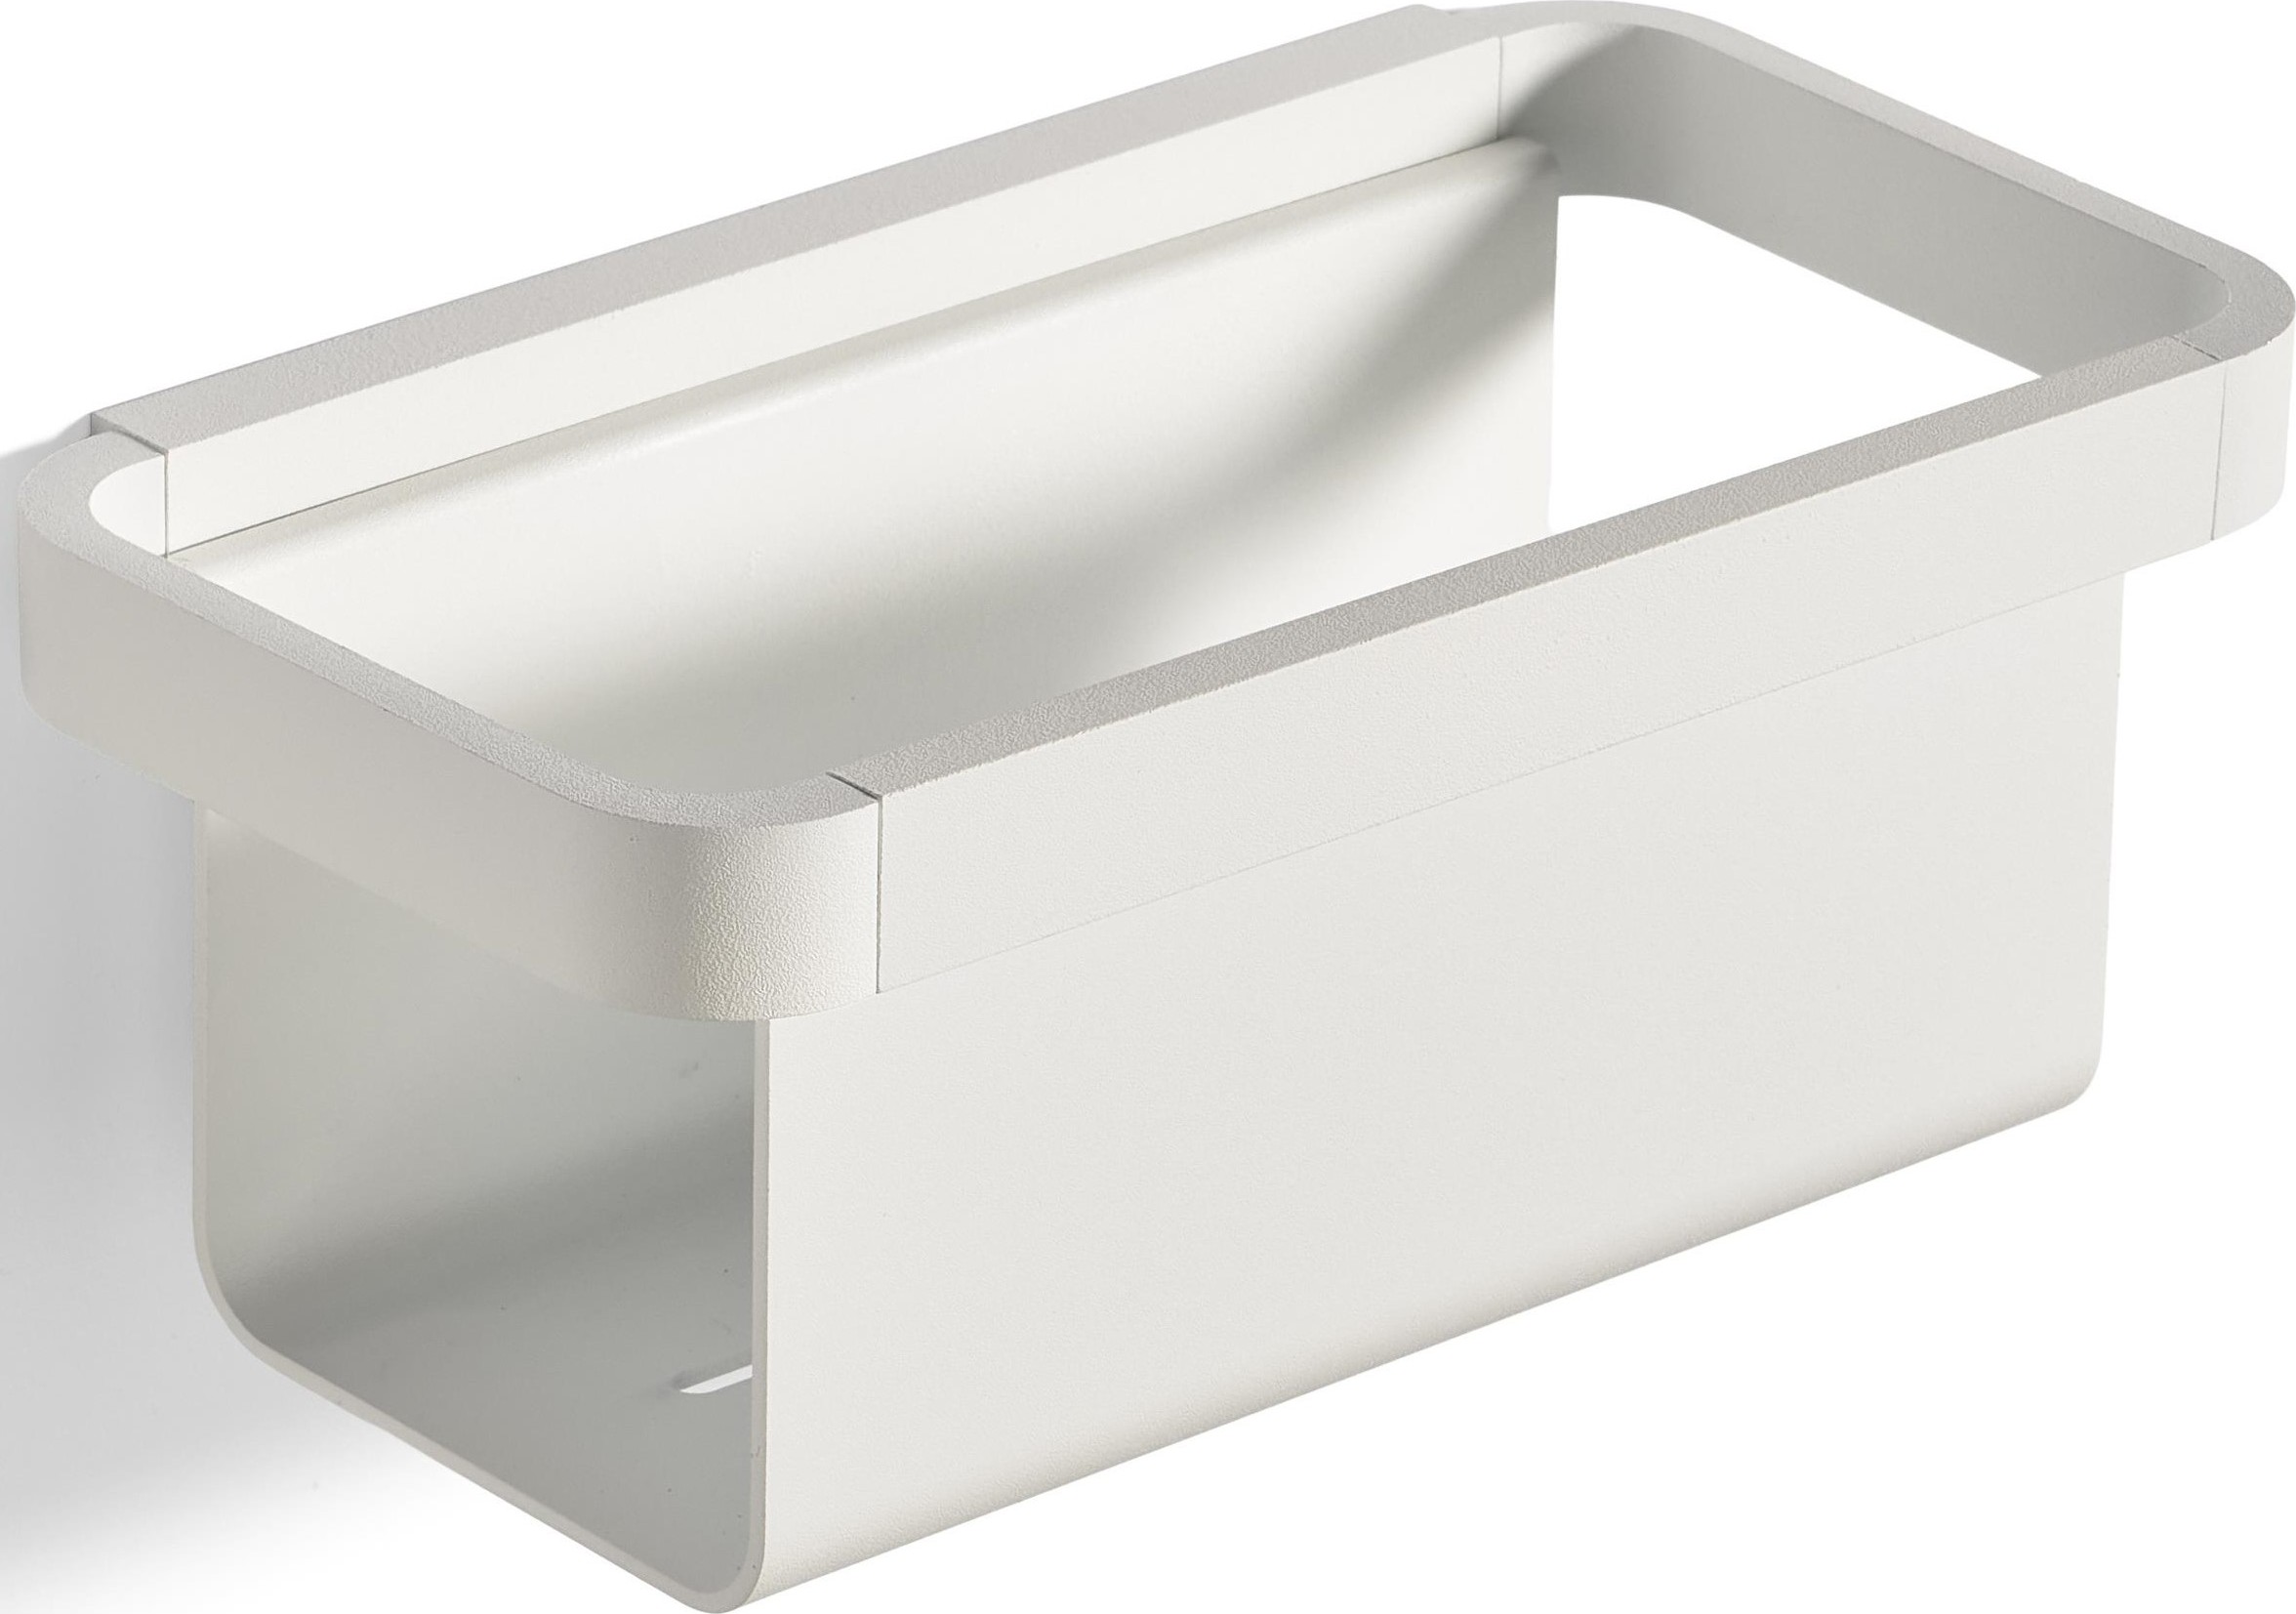 White Deep Box Frame - 30cm x 30cm From 0.50 GBP